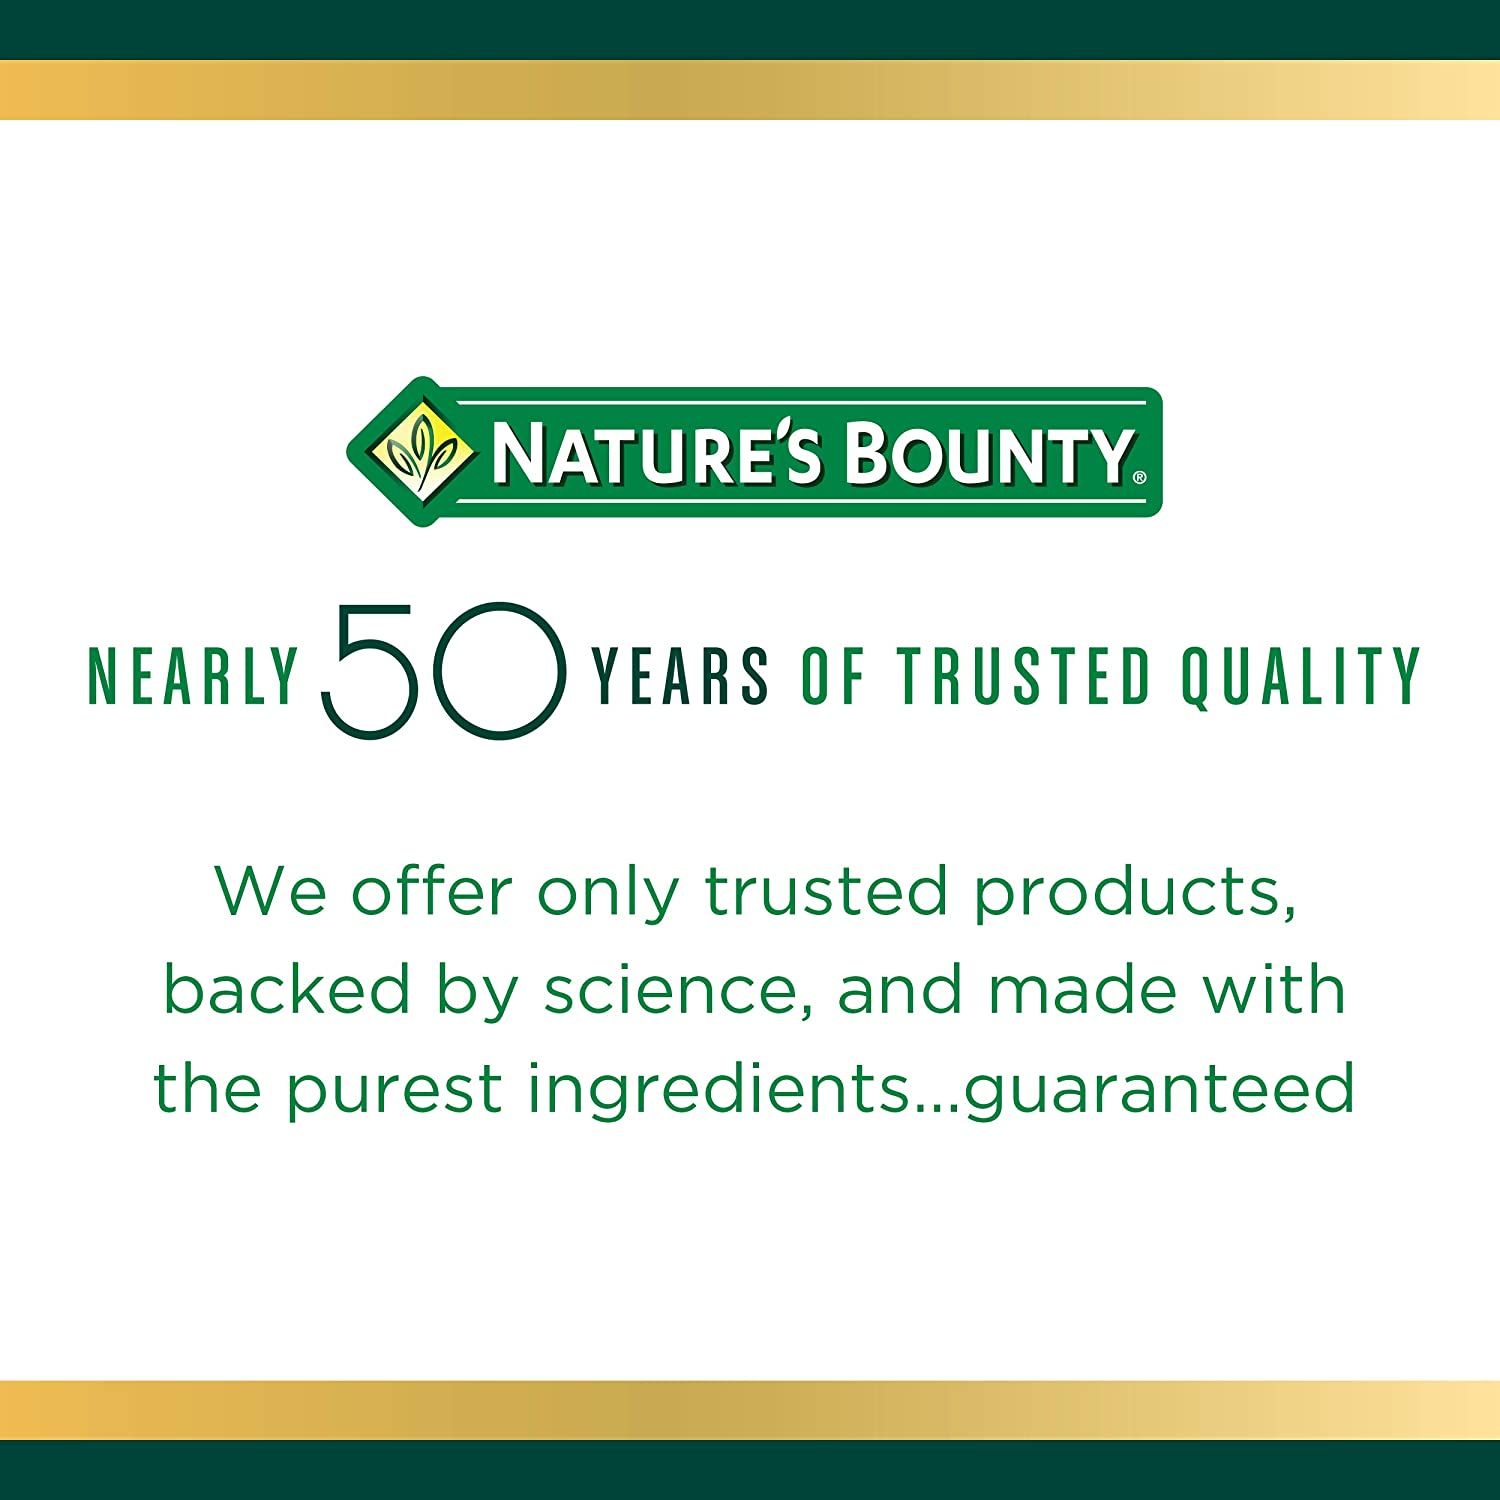 Nature's Bounty Mini Fish Oil 1290 mg Softgels - 90 ct